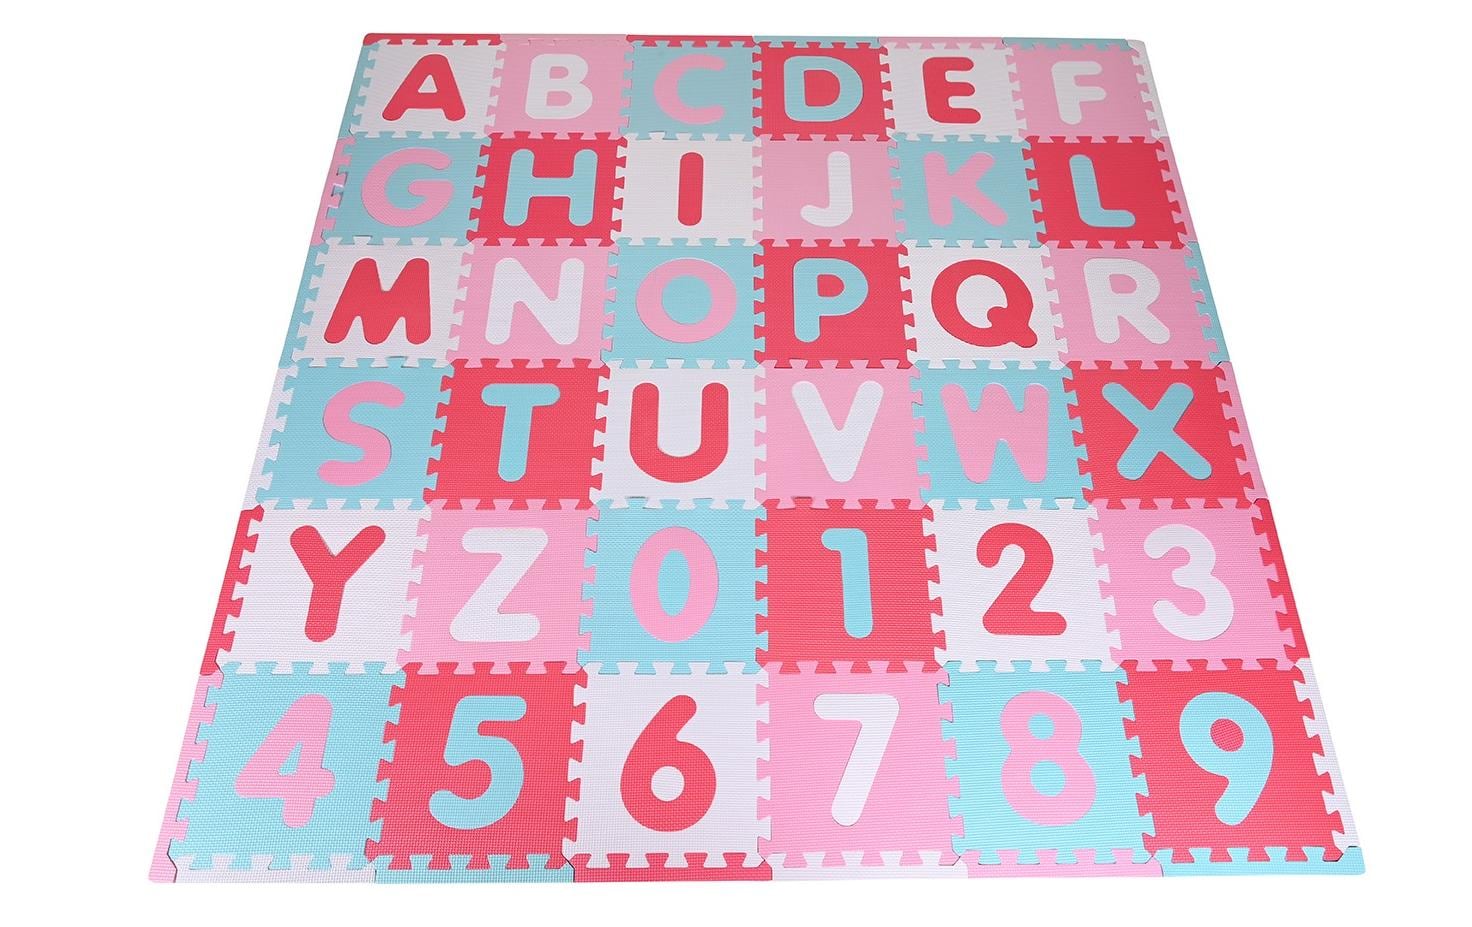 Knorrtoys Puzzlematte Alphabet + Zahlen pink-rosa